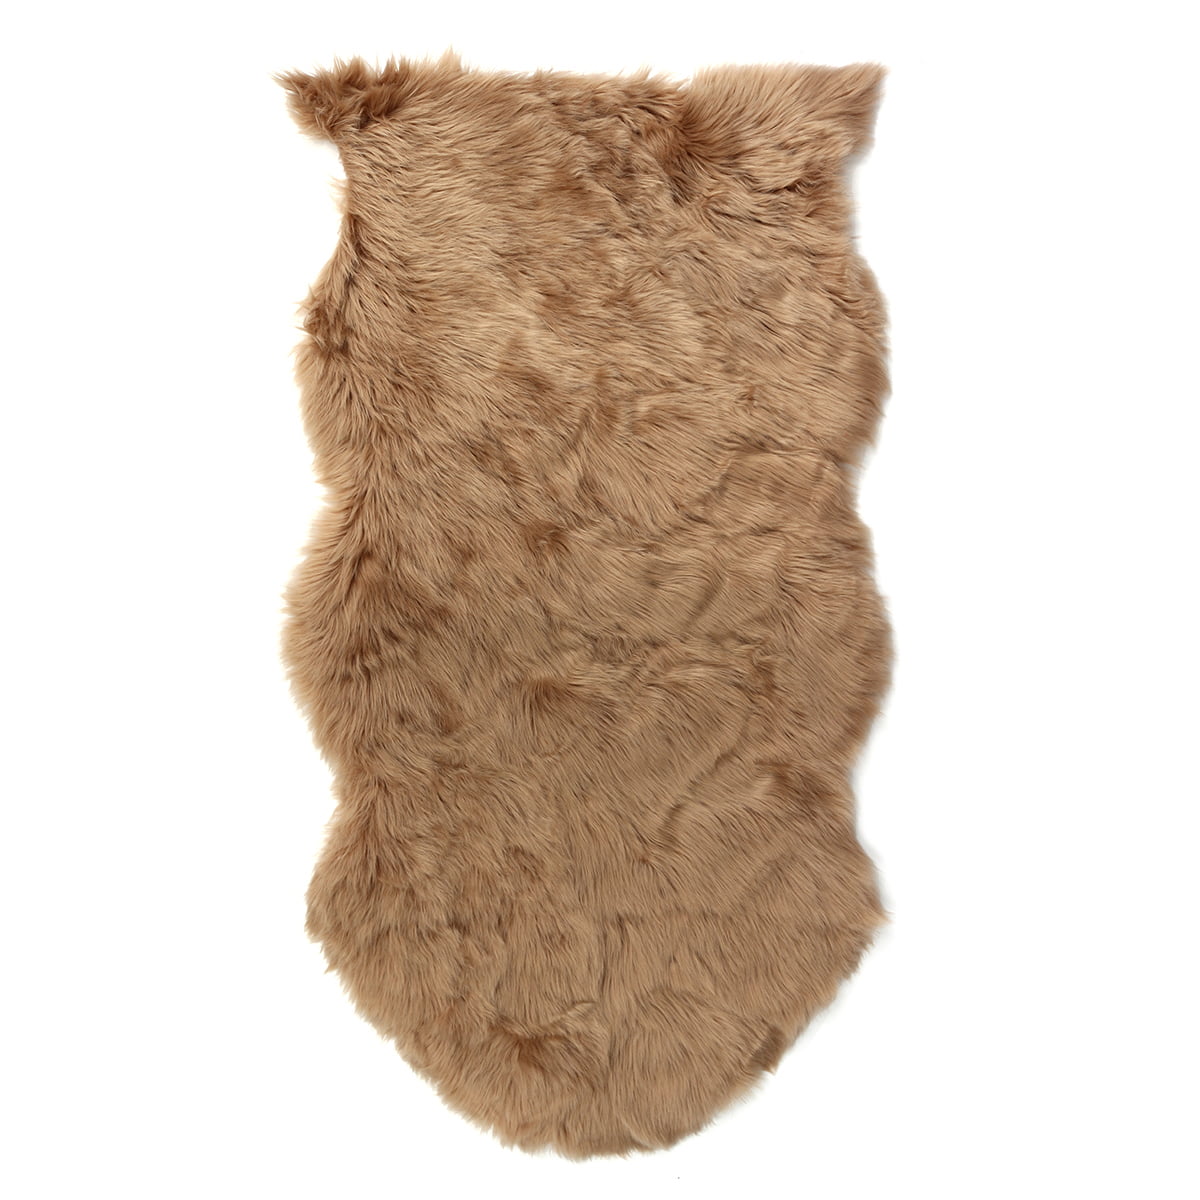 joyMerit Soft Artificial Fur Area Rug Furry Fluffy Soft Sheep Hide Animal Skin Artificial Wool Made Area Rug 30x40cm 